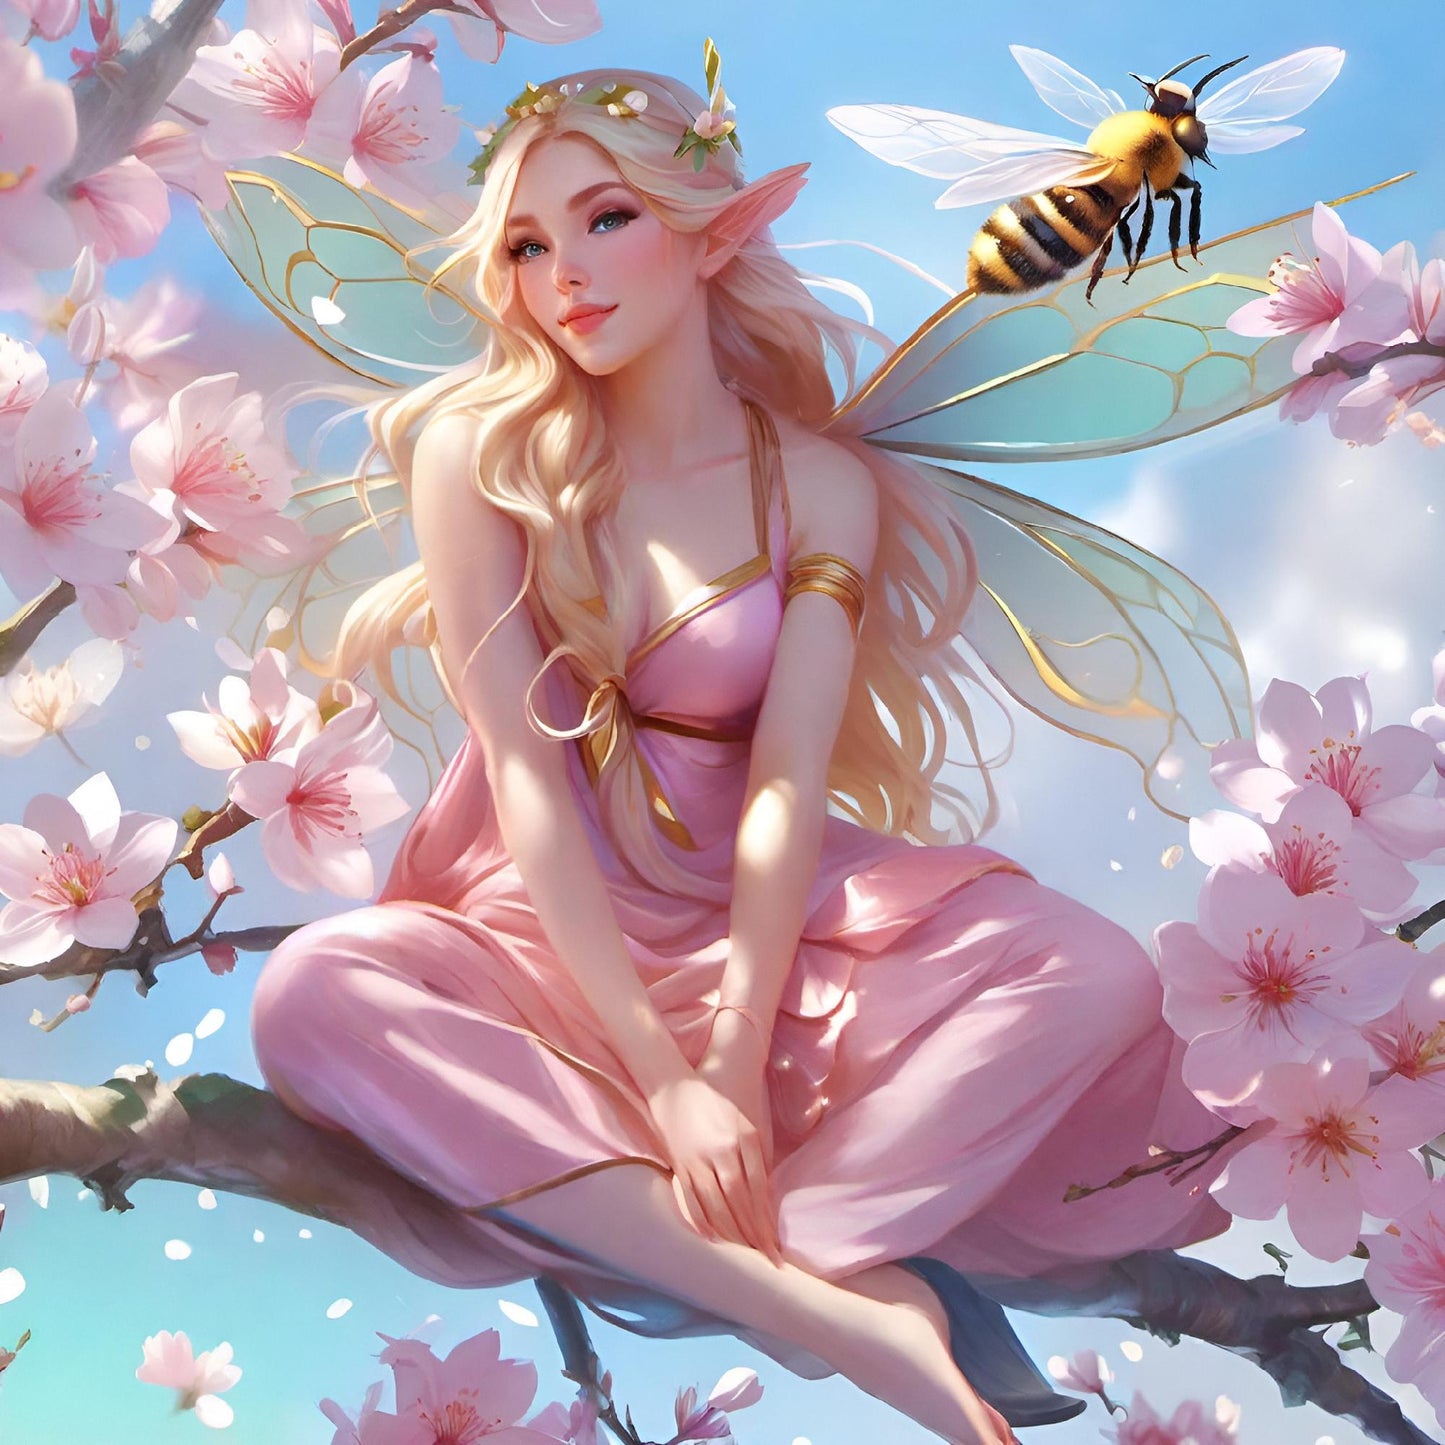 Fairy Blossom - Hydrating Body Oil